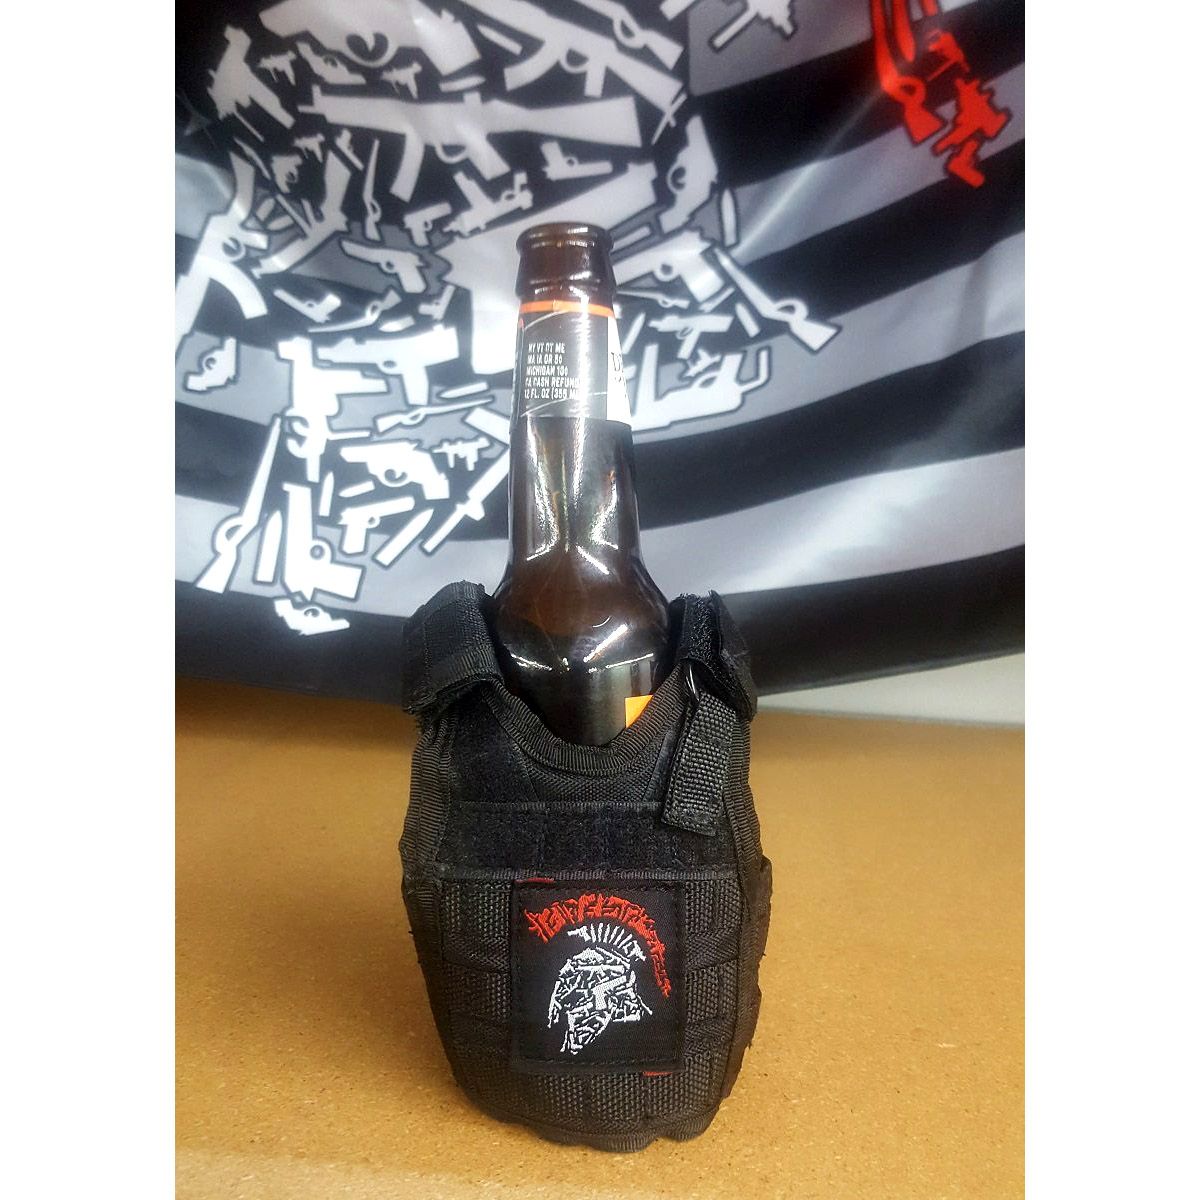 2019 Shot Show Rapid Dominance Tactical Gear Beer Black Koozie Mini Vest RAPDOM 